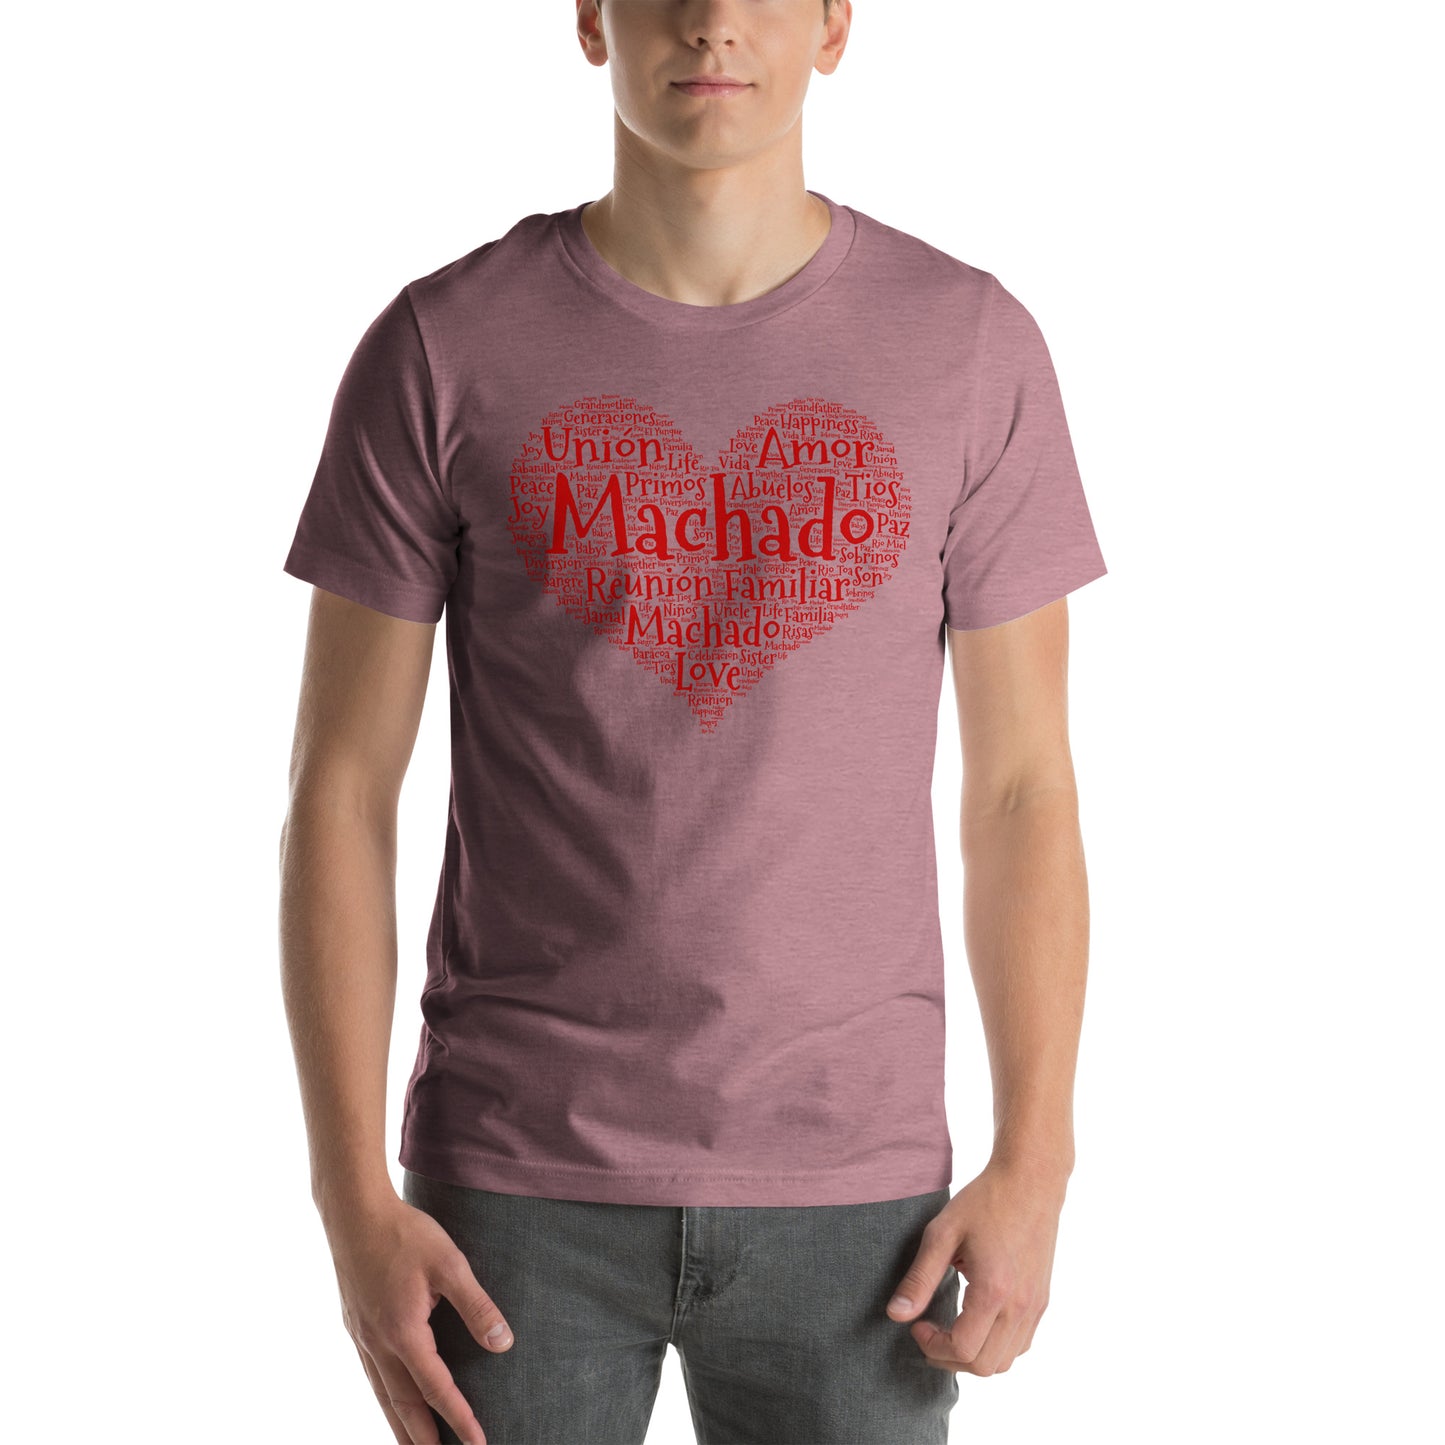 MACHADO FAMILY Unisex t-shirt